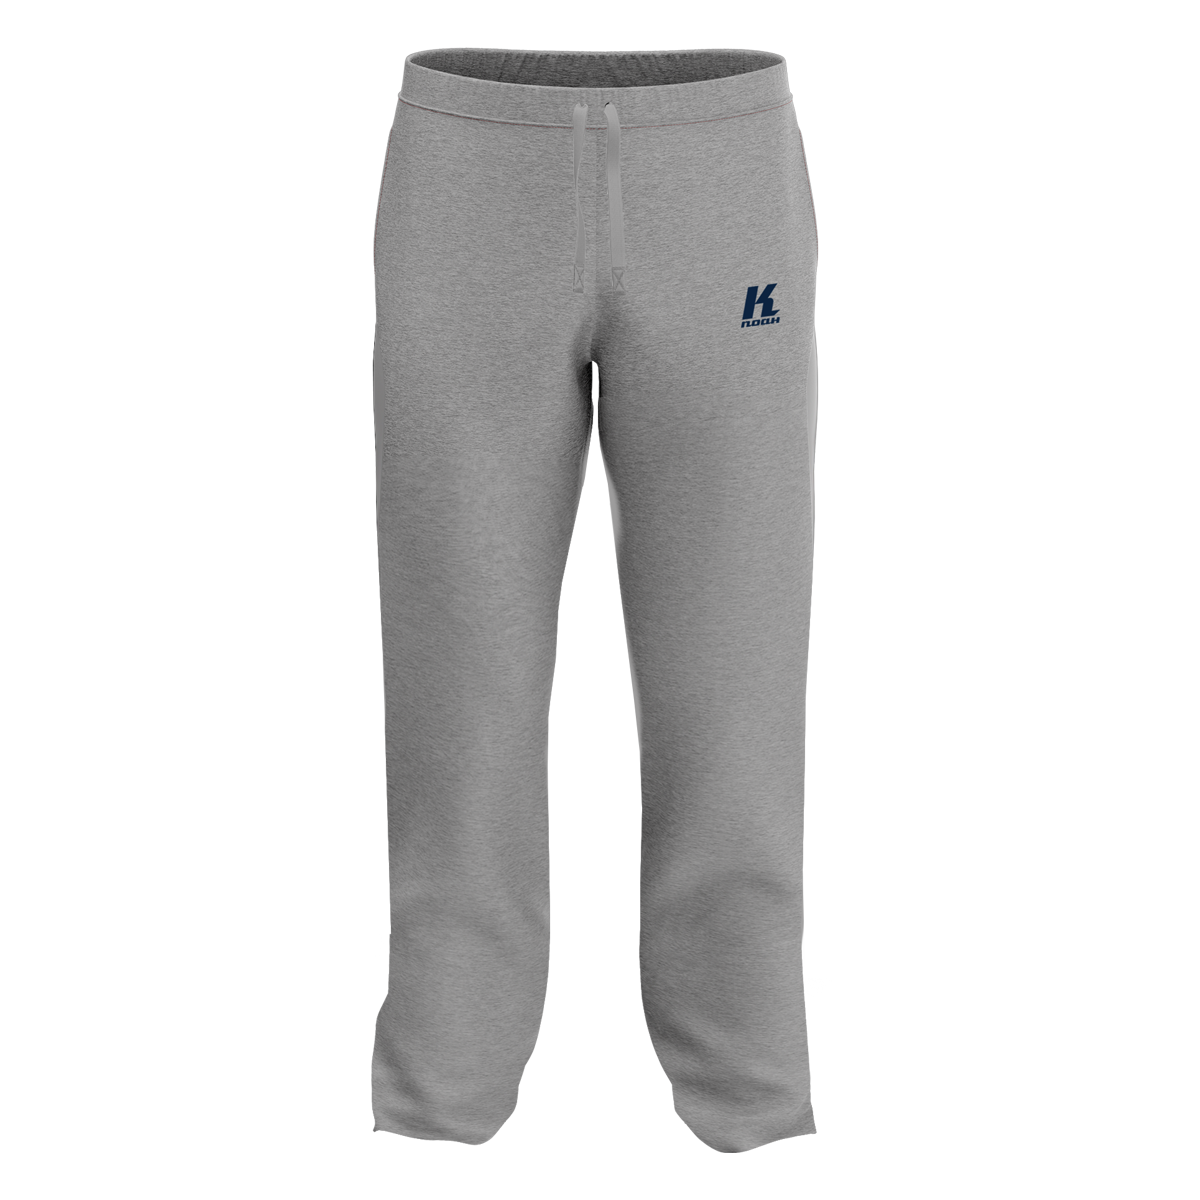 Rams Basic Sweatpant Grey ST799